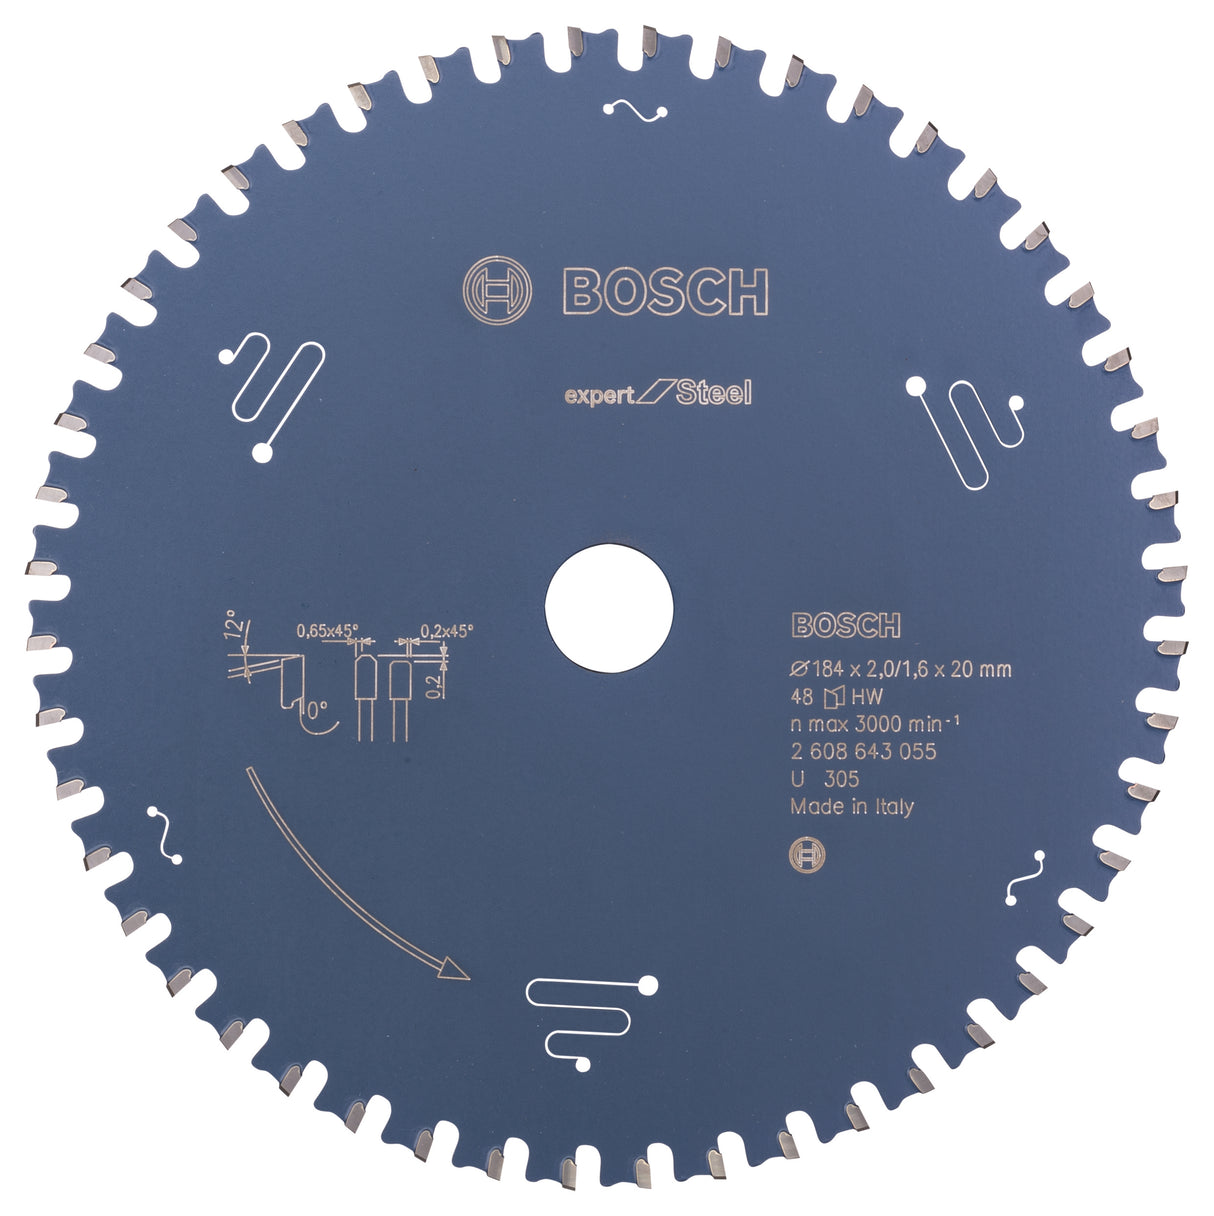 Bosch Professional Circular Saw Blade Expert for Steel - 184 x 20 x 2.0 mm, 48 Teeth